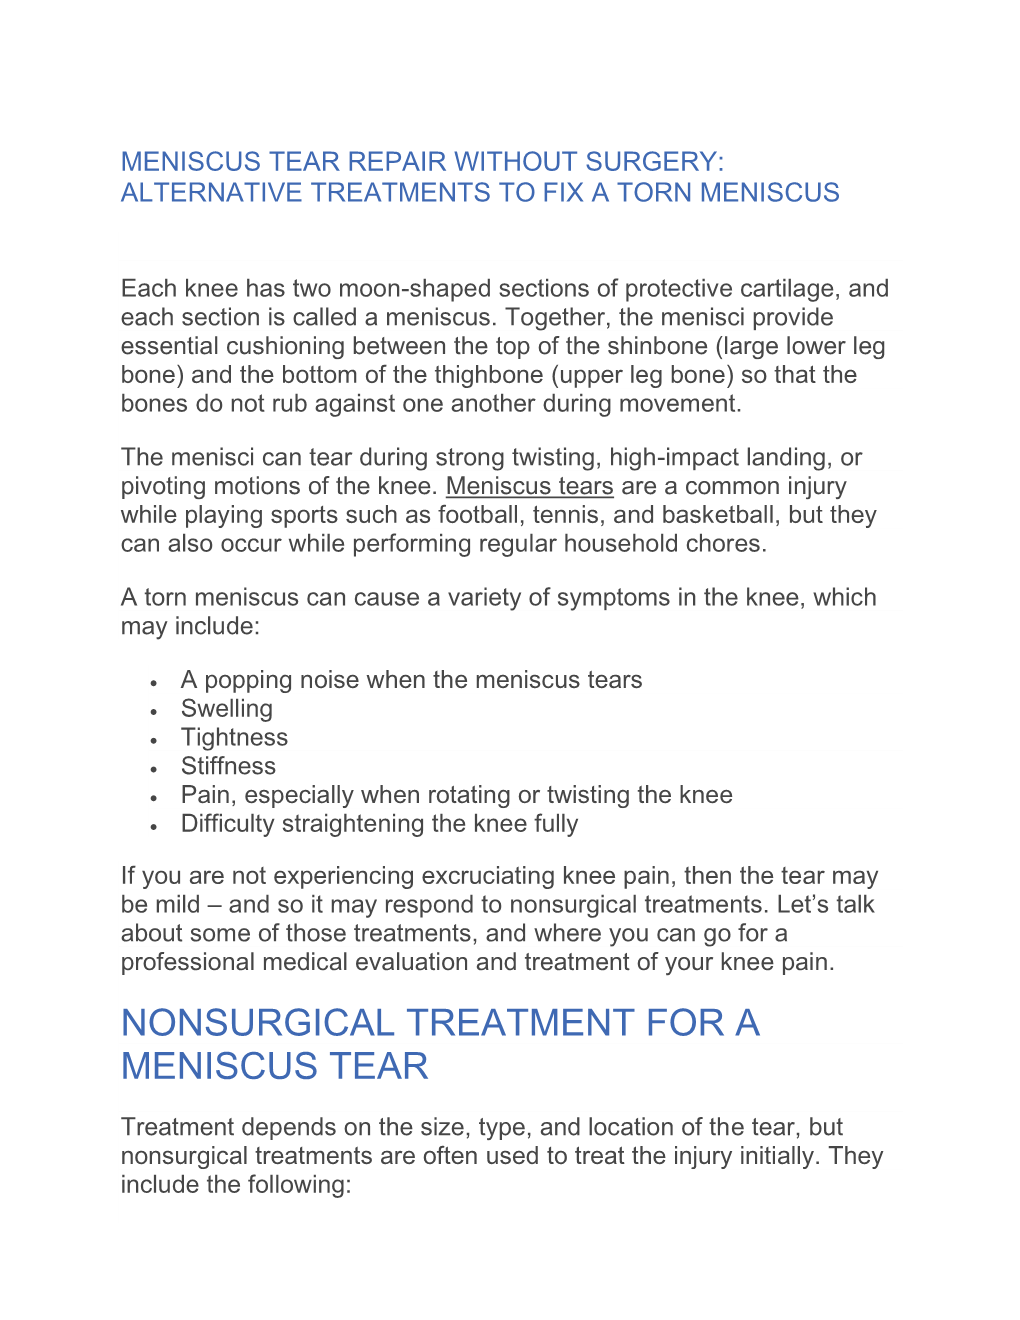 Meniscus Tear Repair Without Surgery: Alternative Treatments to Fix a Torn Meniscus